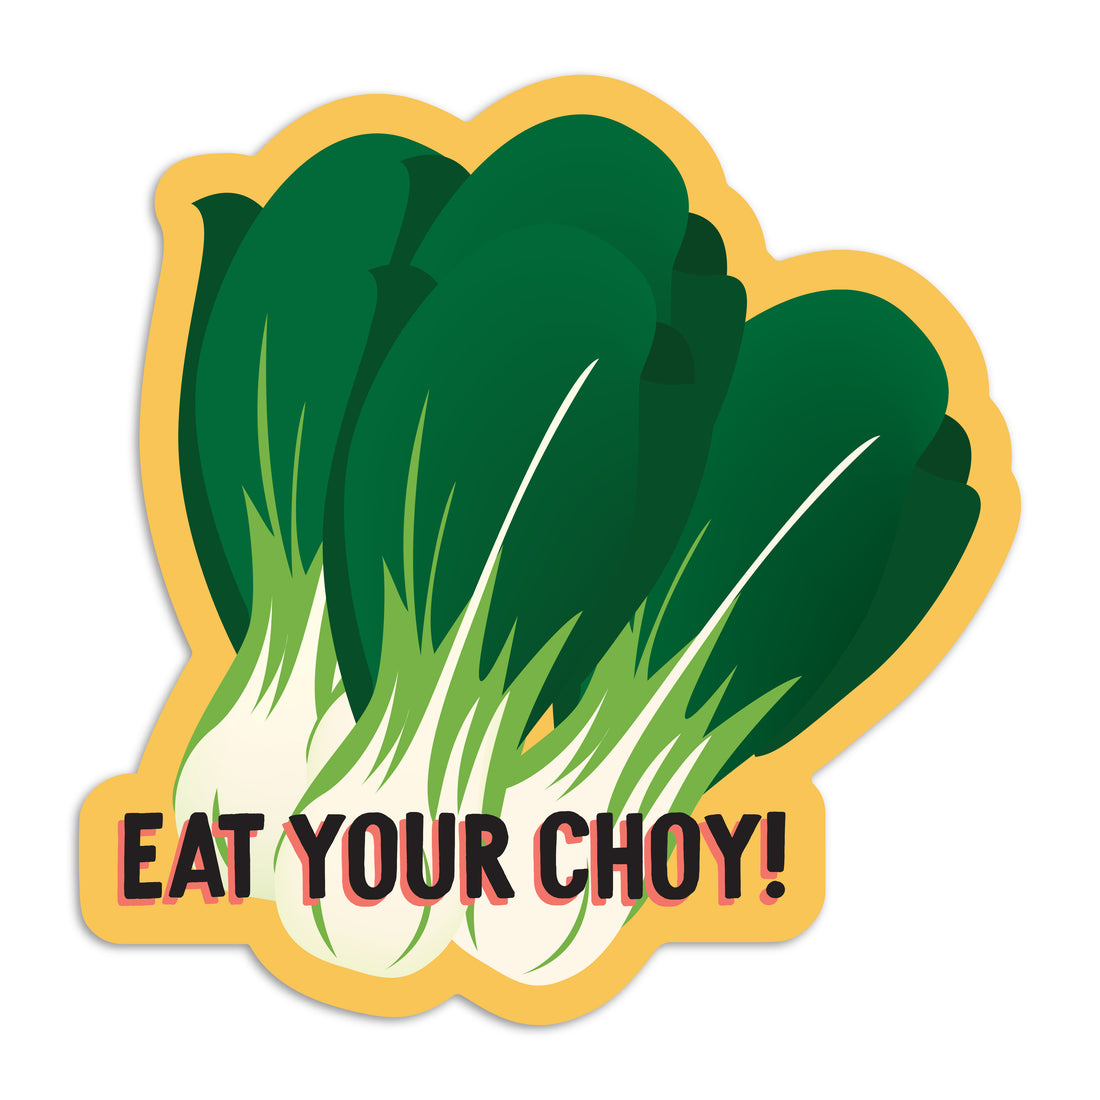 Eat your choy bok choy vinyl sticker by I&